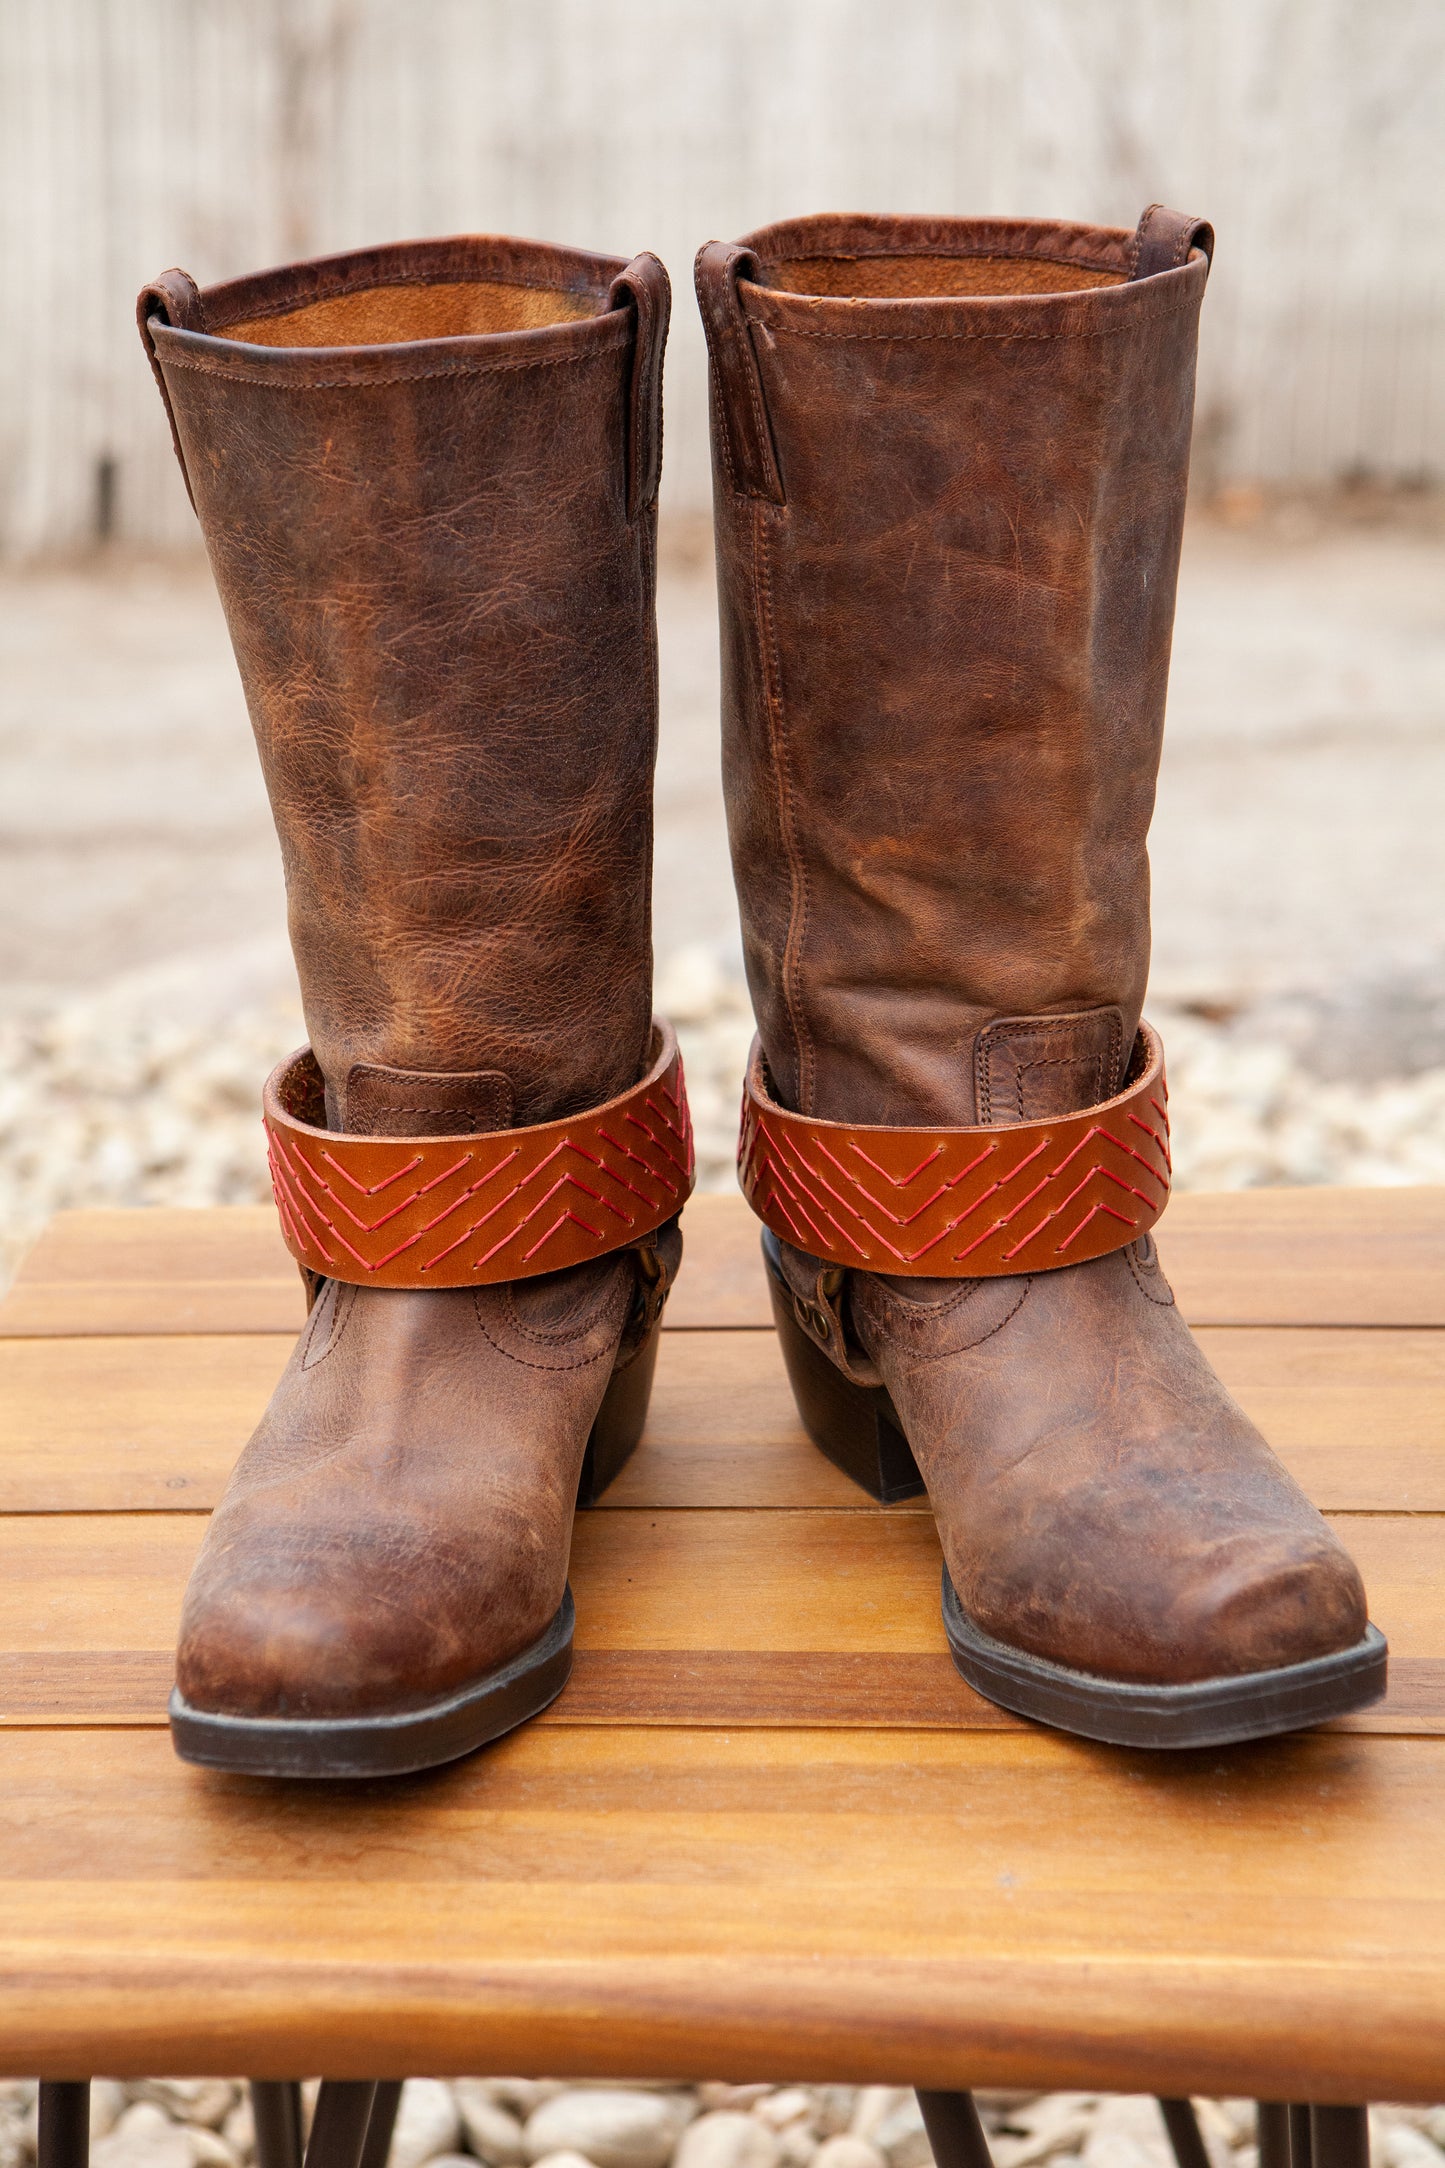 Arcadia - Handmade Premium Leather Boot Cuffs by Hoof & Heel